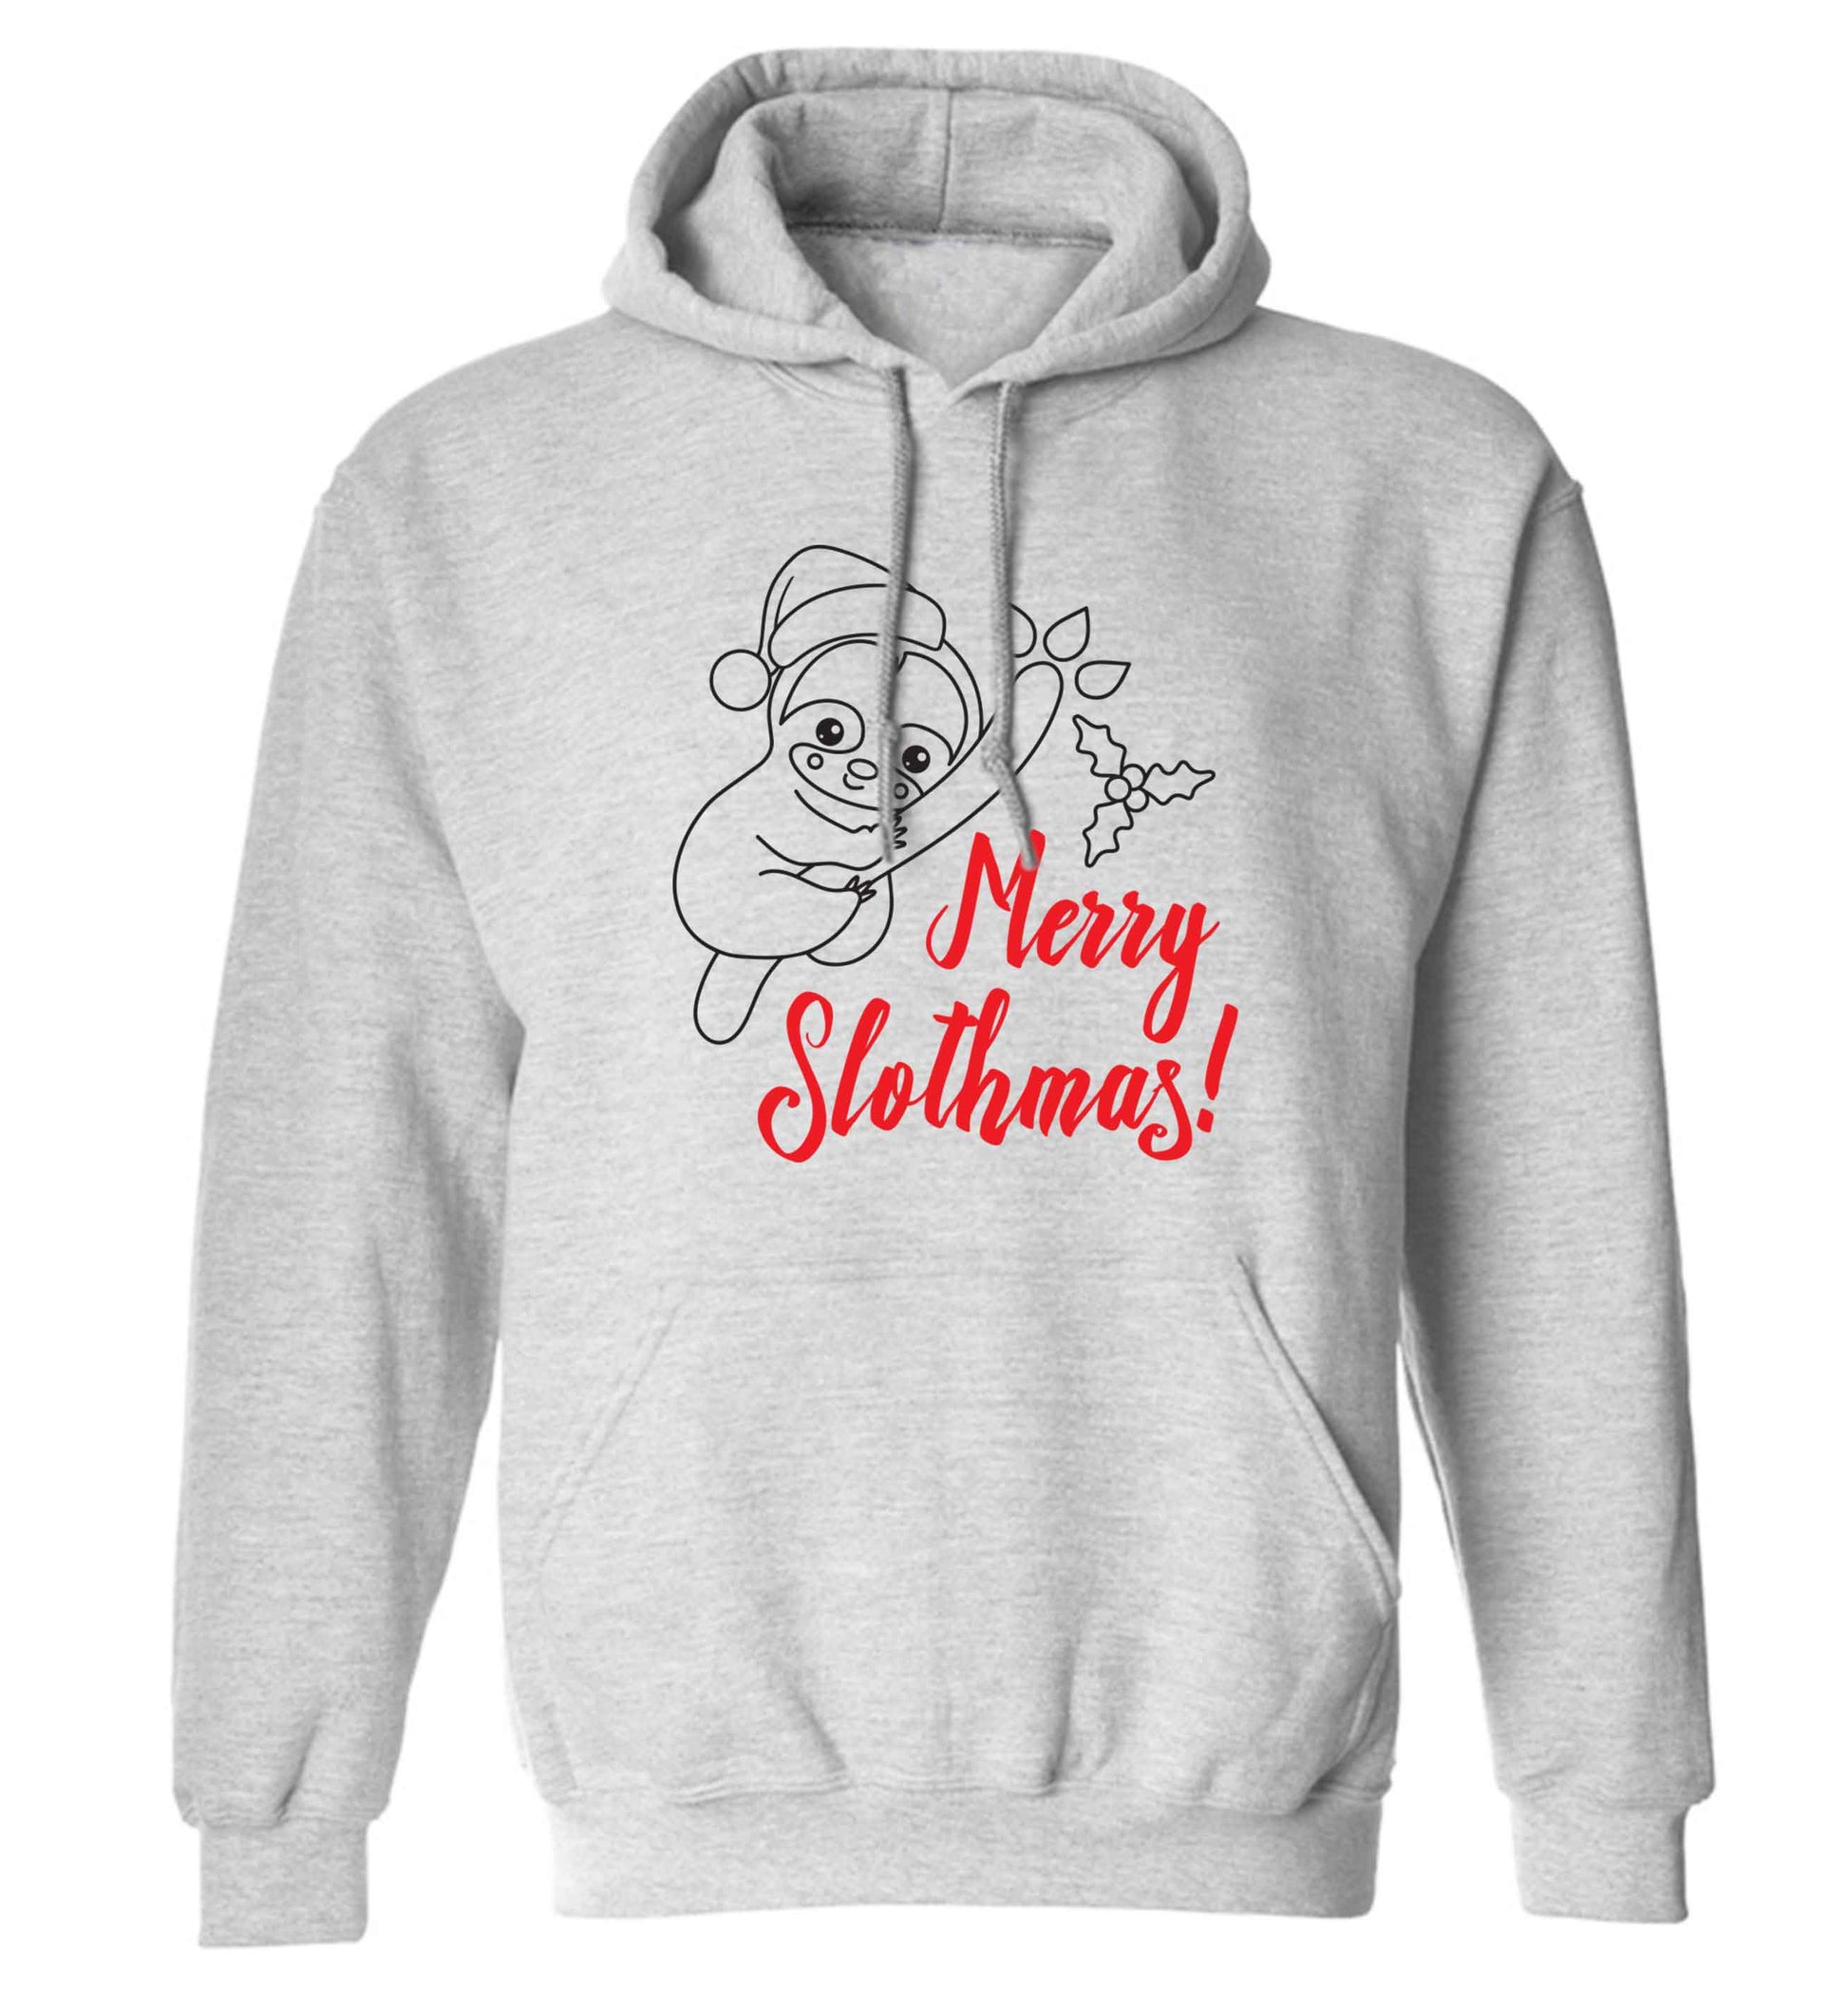 Merry Slothmas adults unisex grey hoodie 2XL